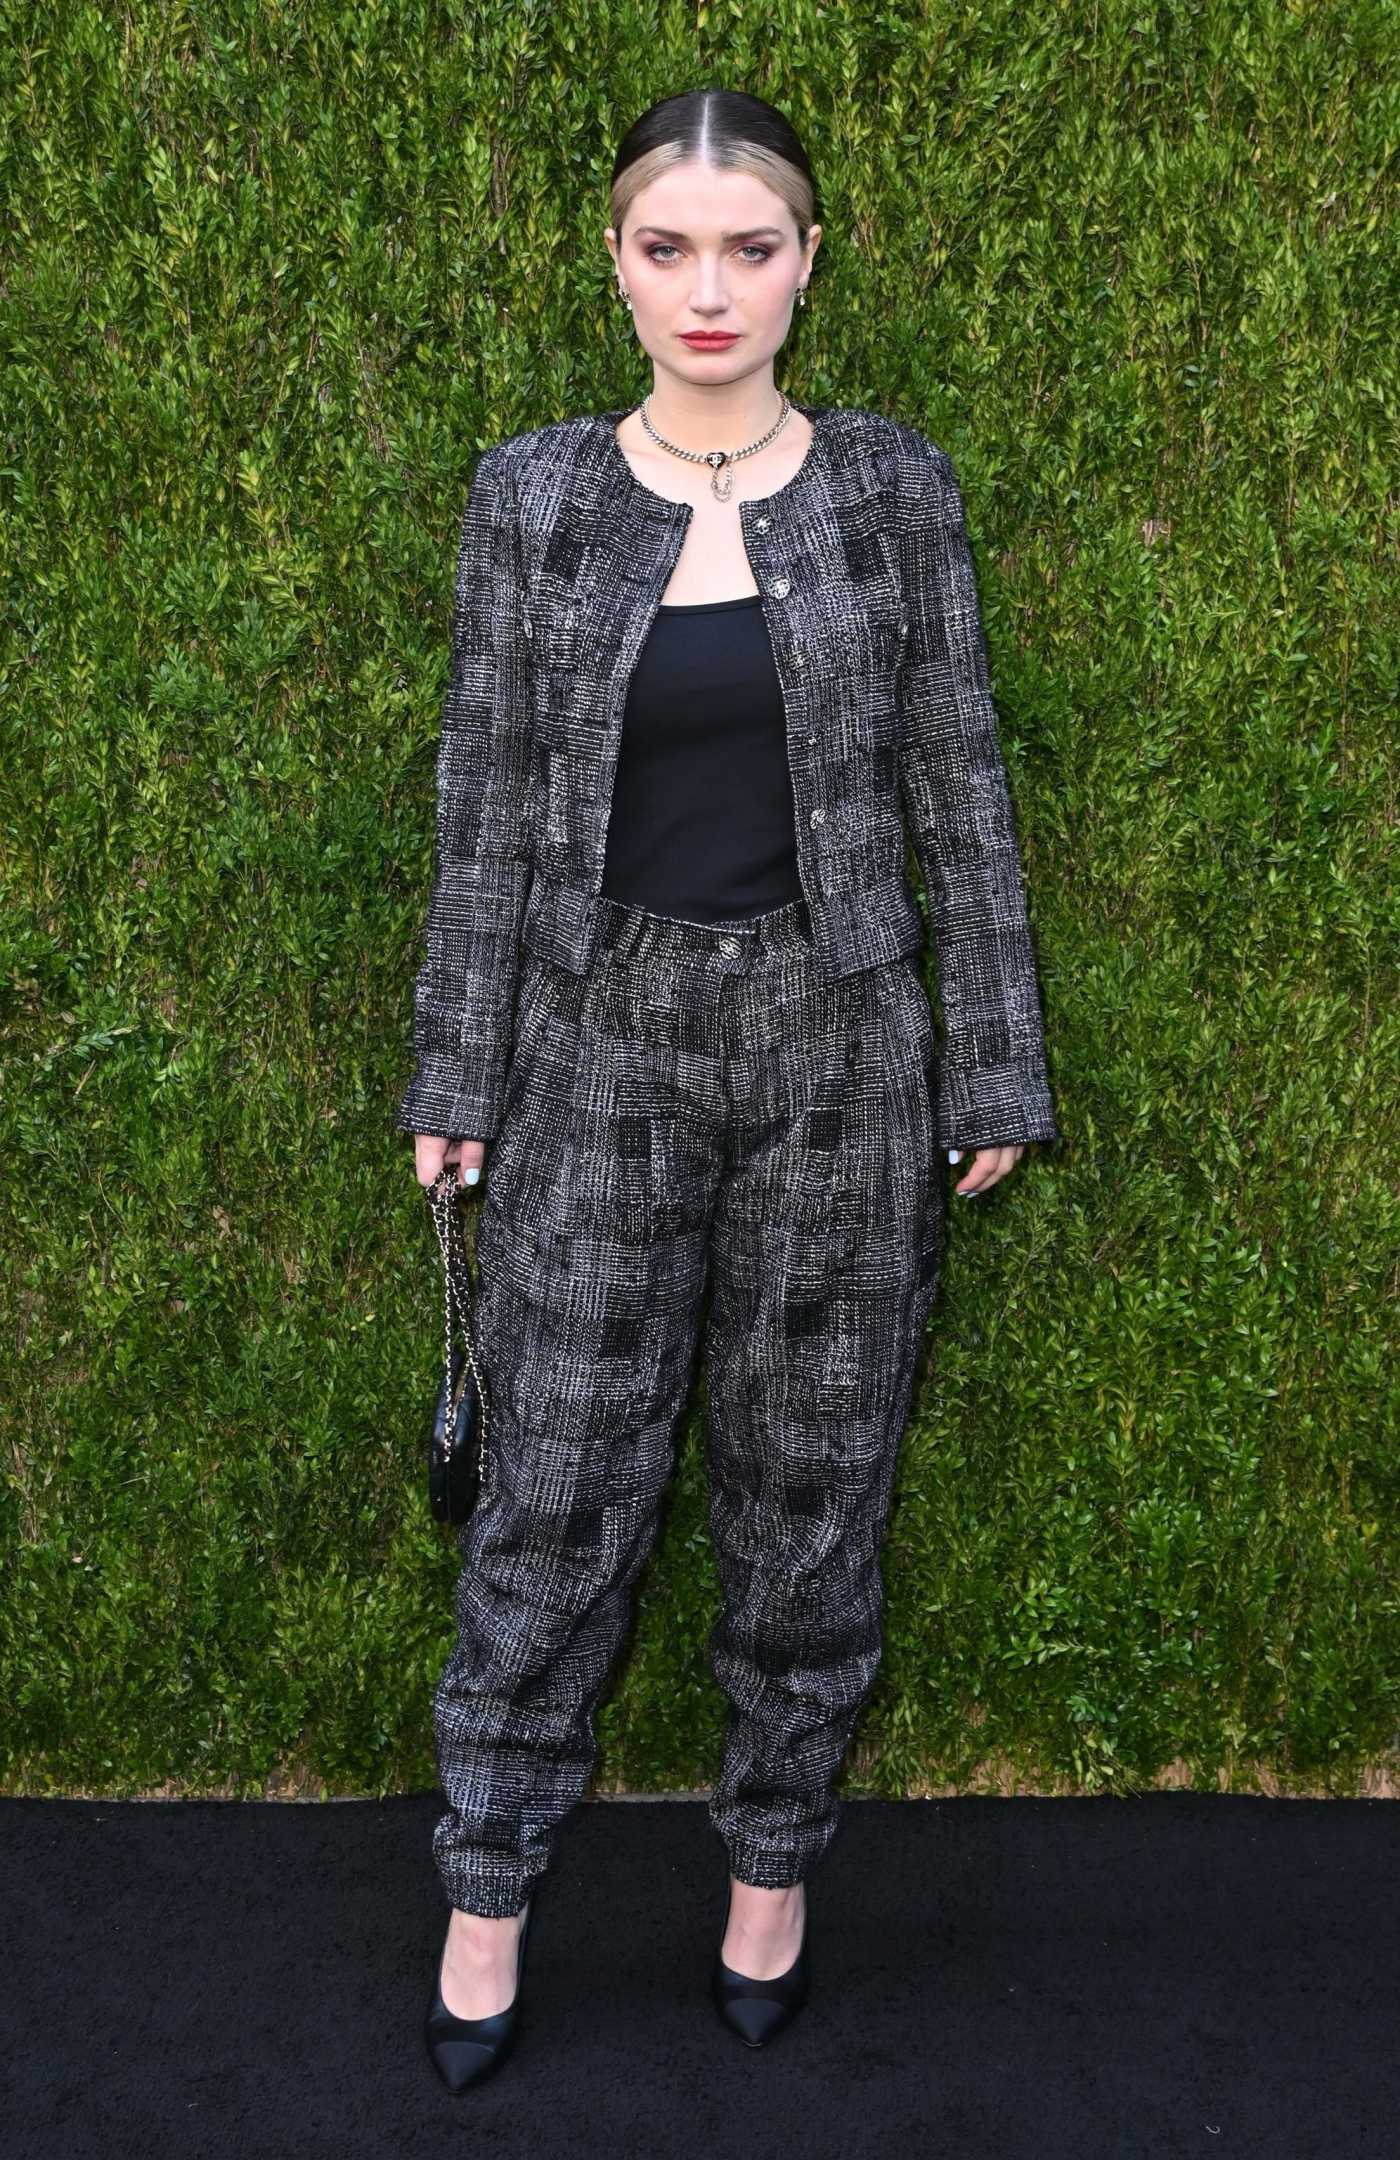 Eve Hewson Attends Tribeca CHANEL Women’s Filmmaker Program Luncheon at Locande Verde in New York City 09/20/2022